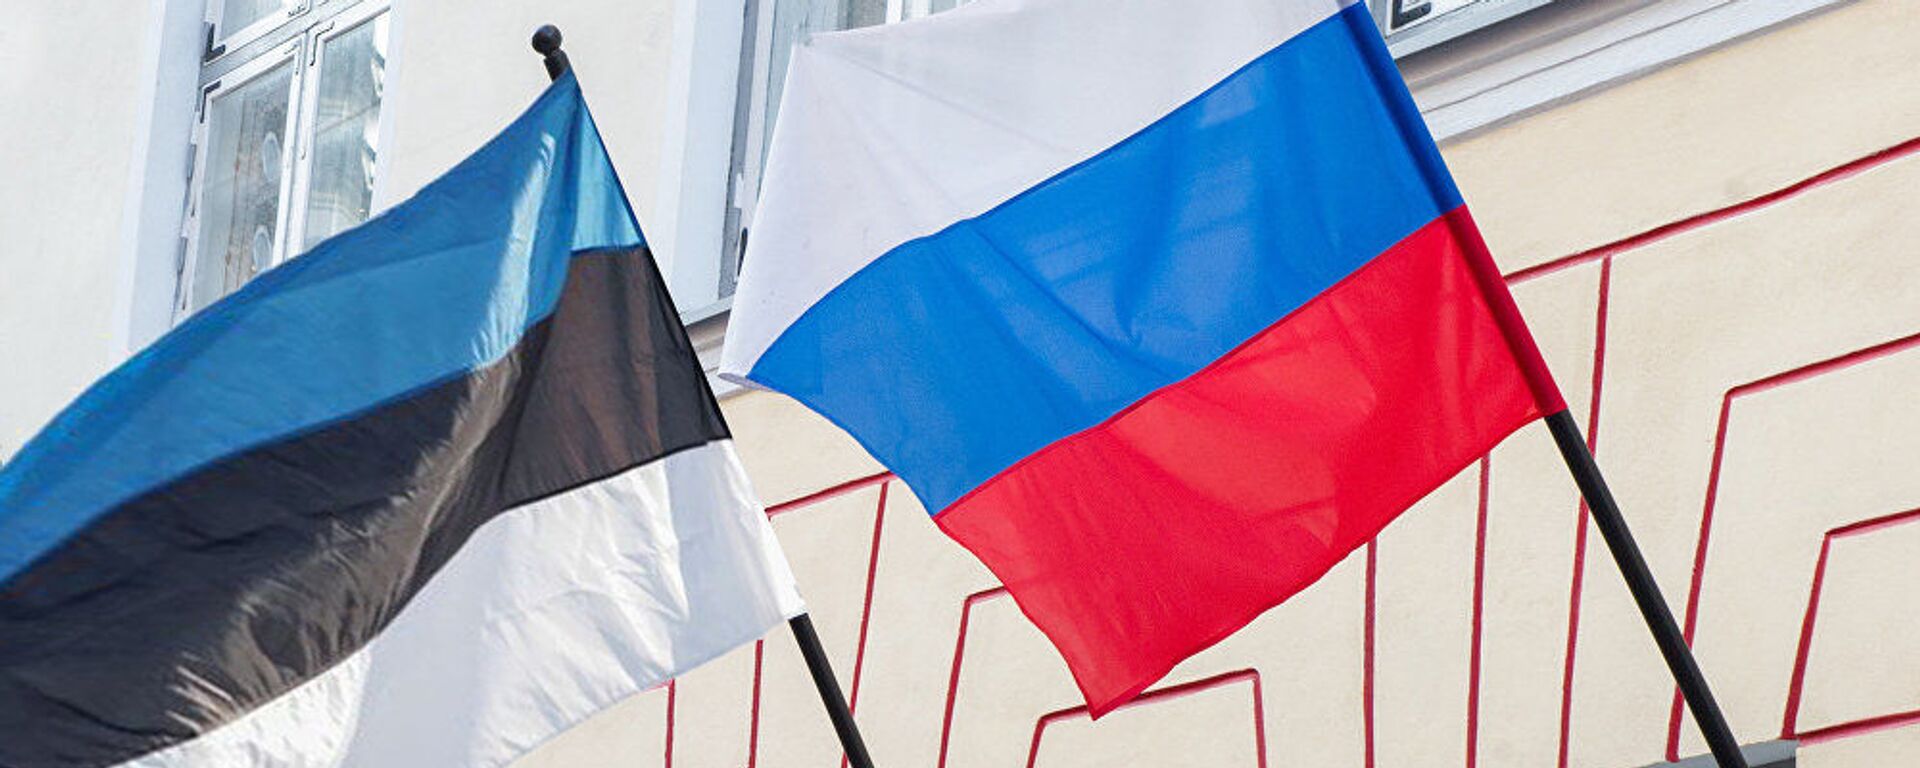 Флаги Эстонии и России - Sputnik Latvija, 1920, 08.07.2021